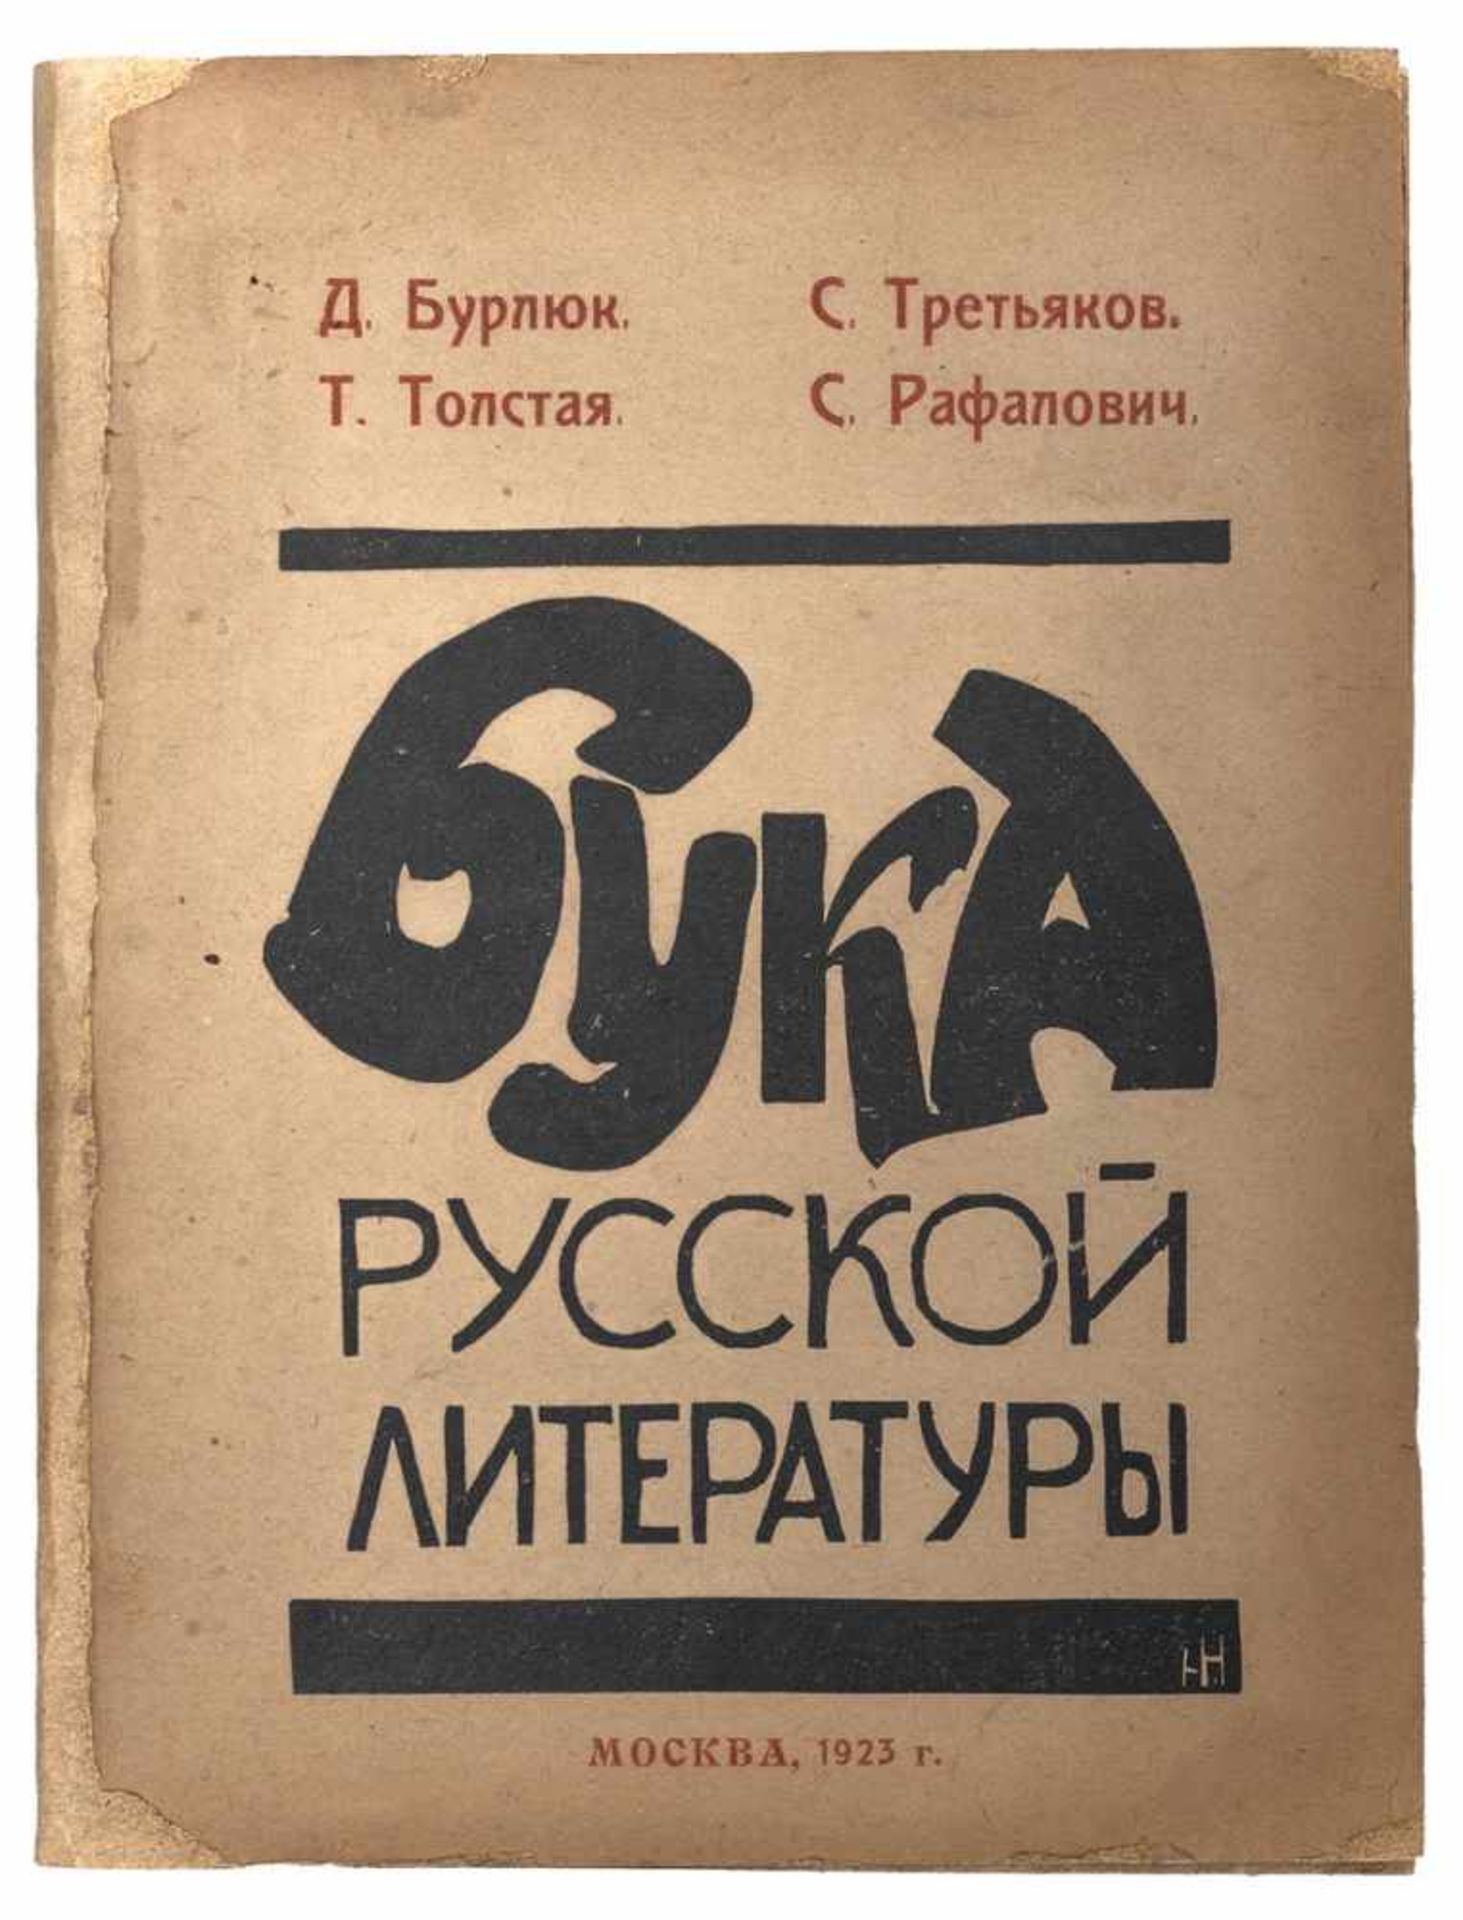 [Soviet art]. Russian literature' Buka [Bogeyman]: Collection of articles about Alexey Krukhchenylh.